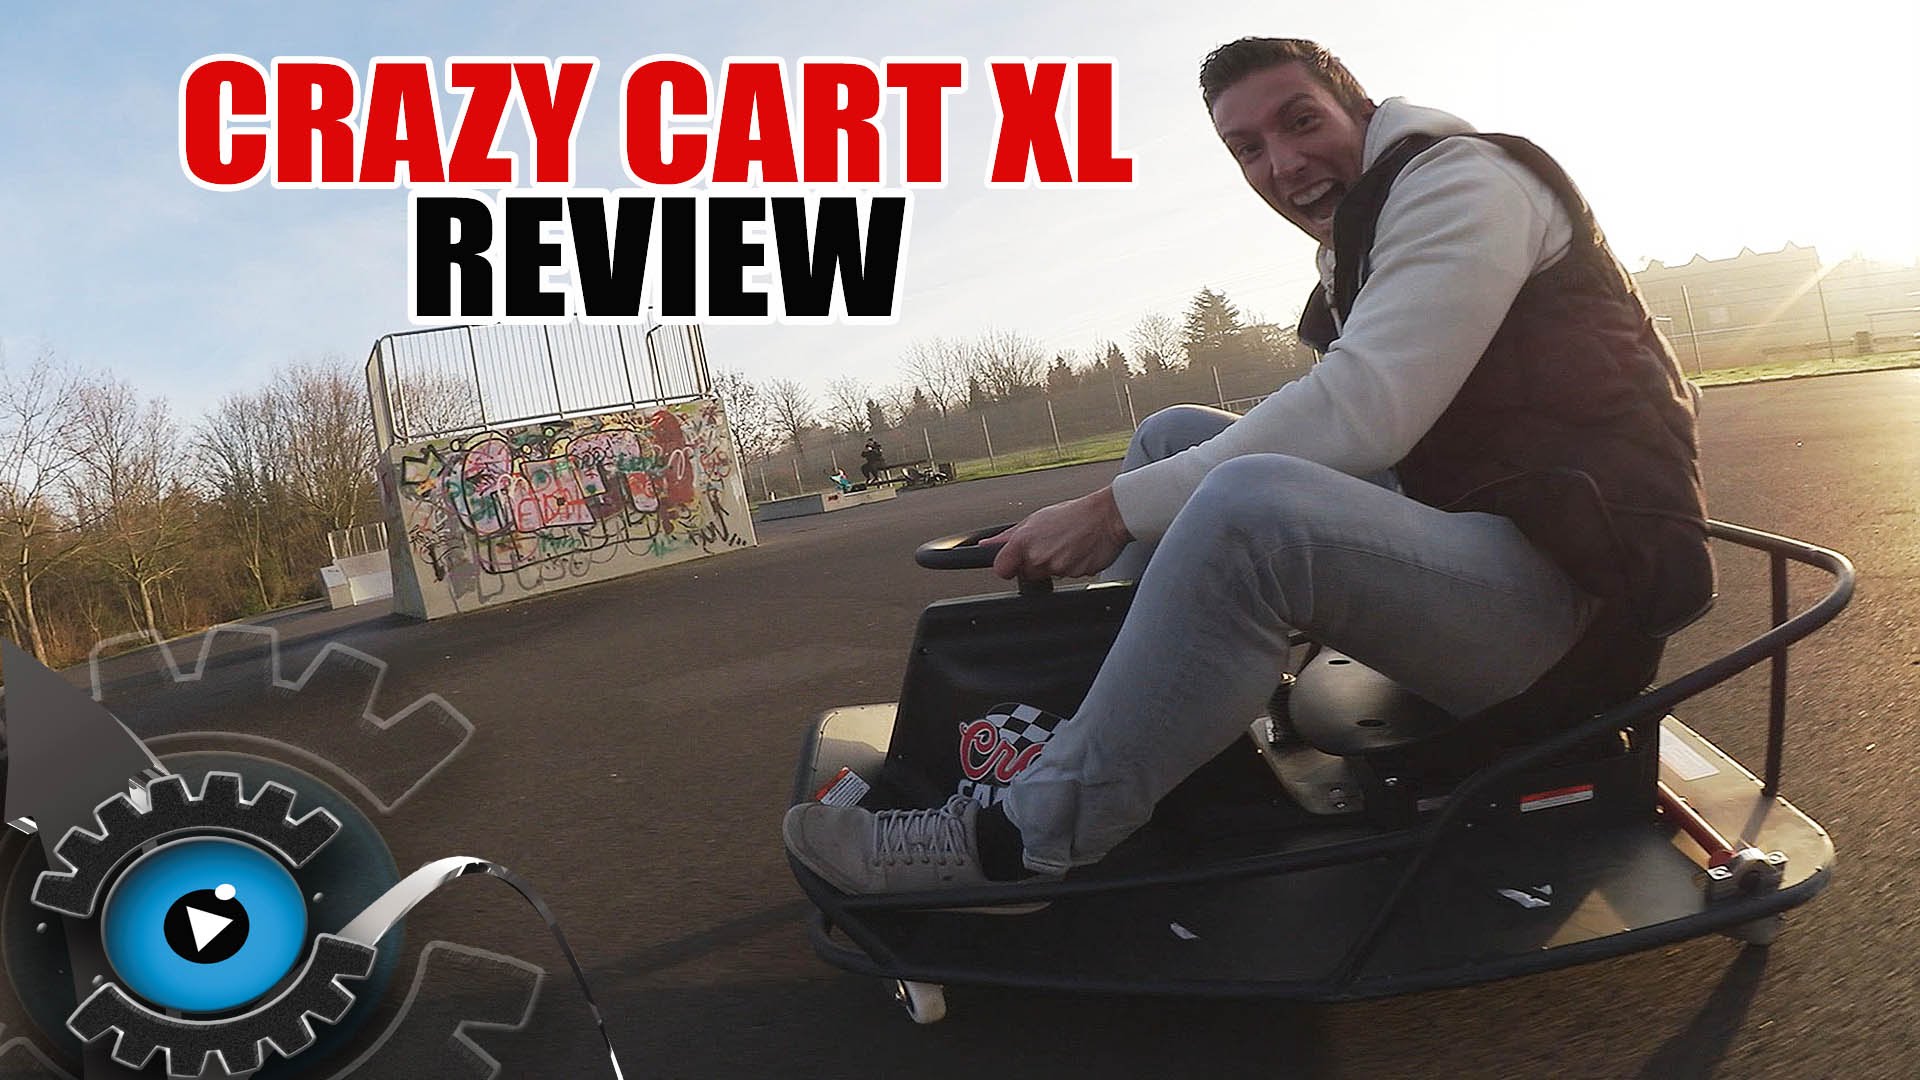 Дрифт-карт Razor Crazy Cart. Razor Crazy Cart XL. Crazy Cart Вегас. Crazy Cart инструктаж. Taxi garage crazy cart